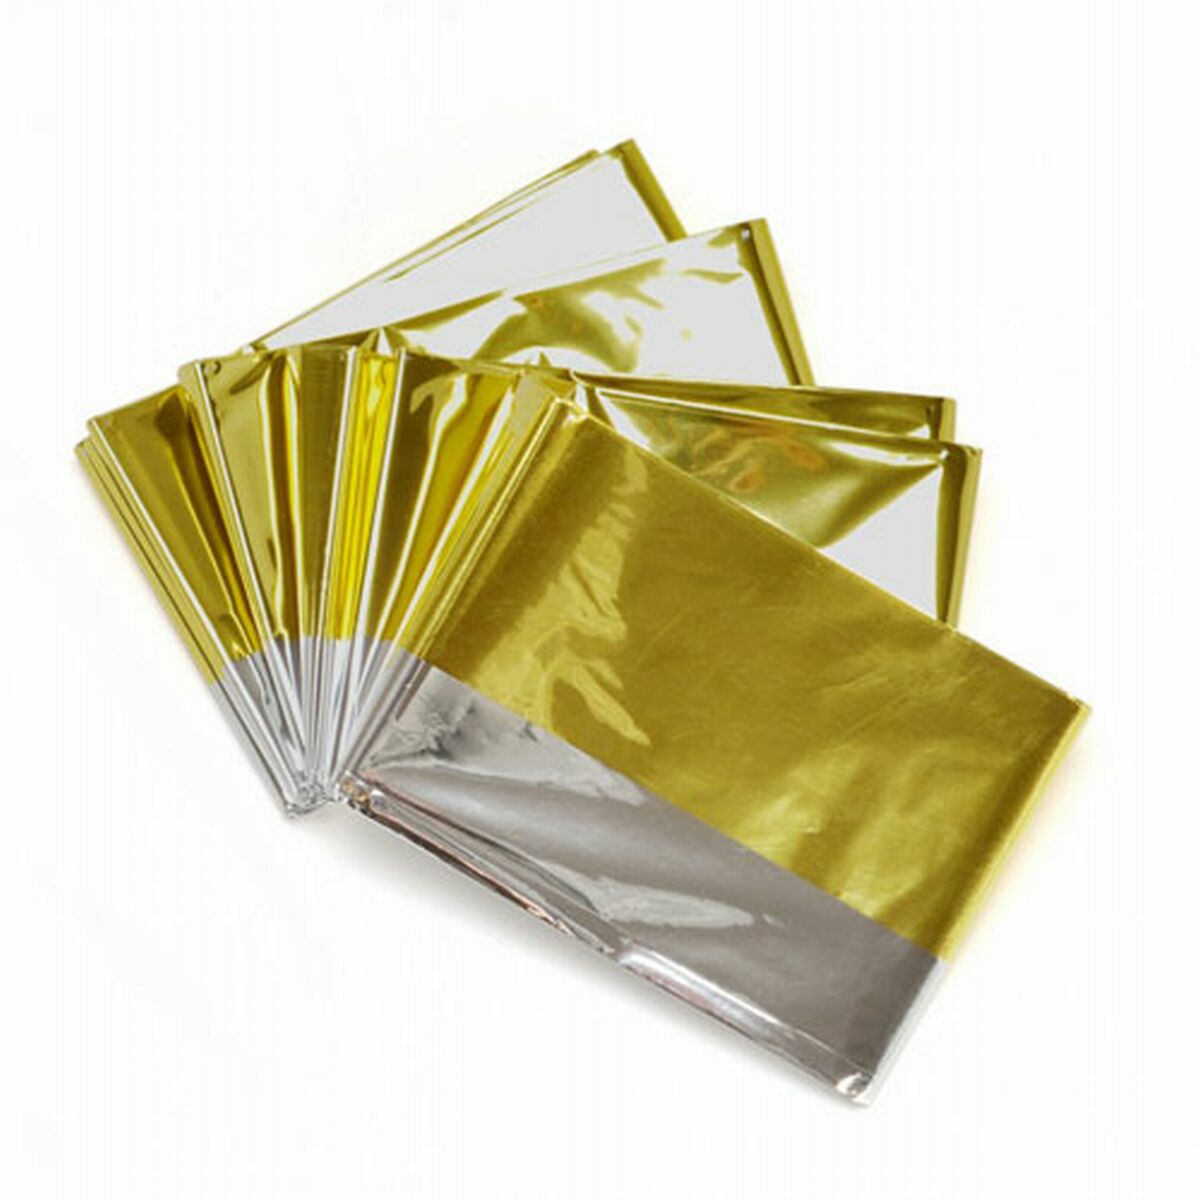 Alu-Rettungsdecke, gold/silber, 210 x 160 cm - FS Medizintechnik